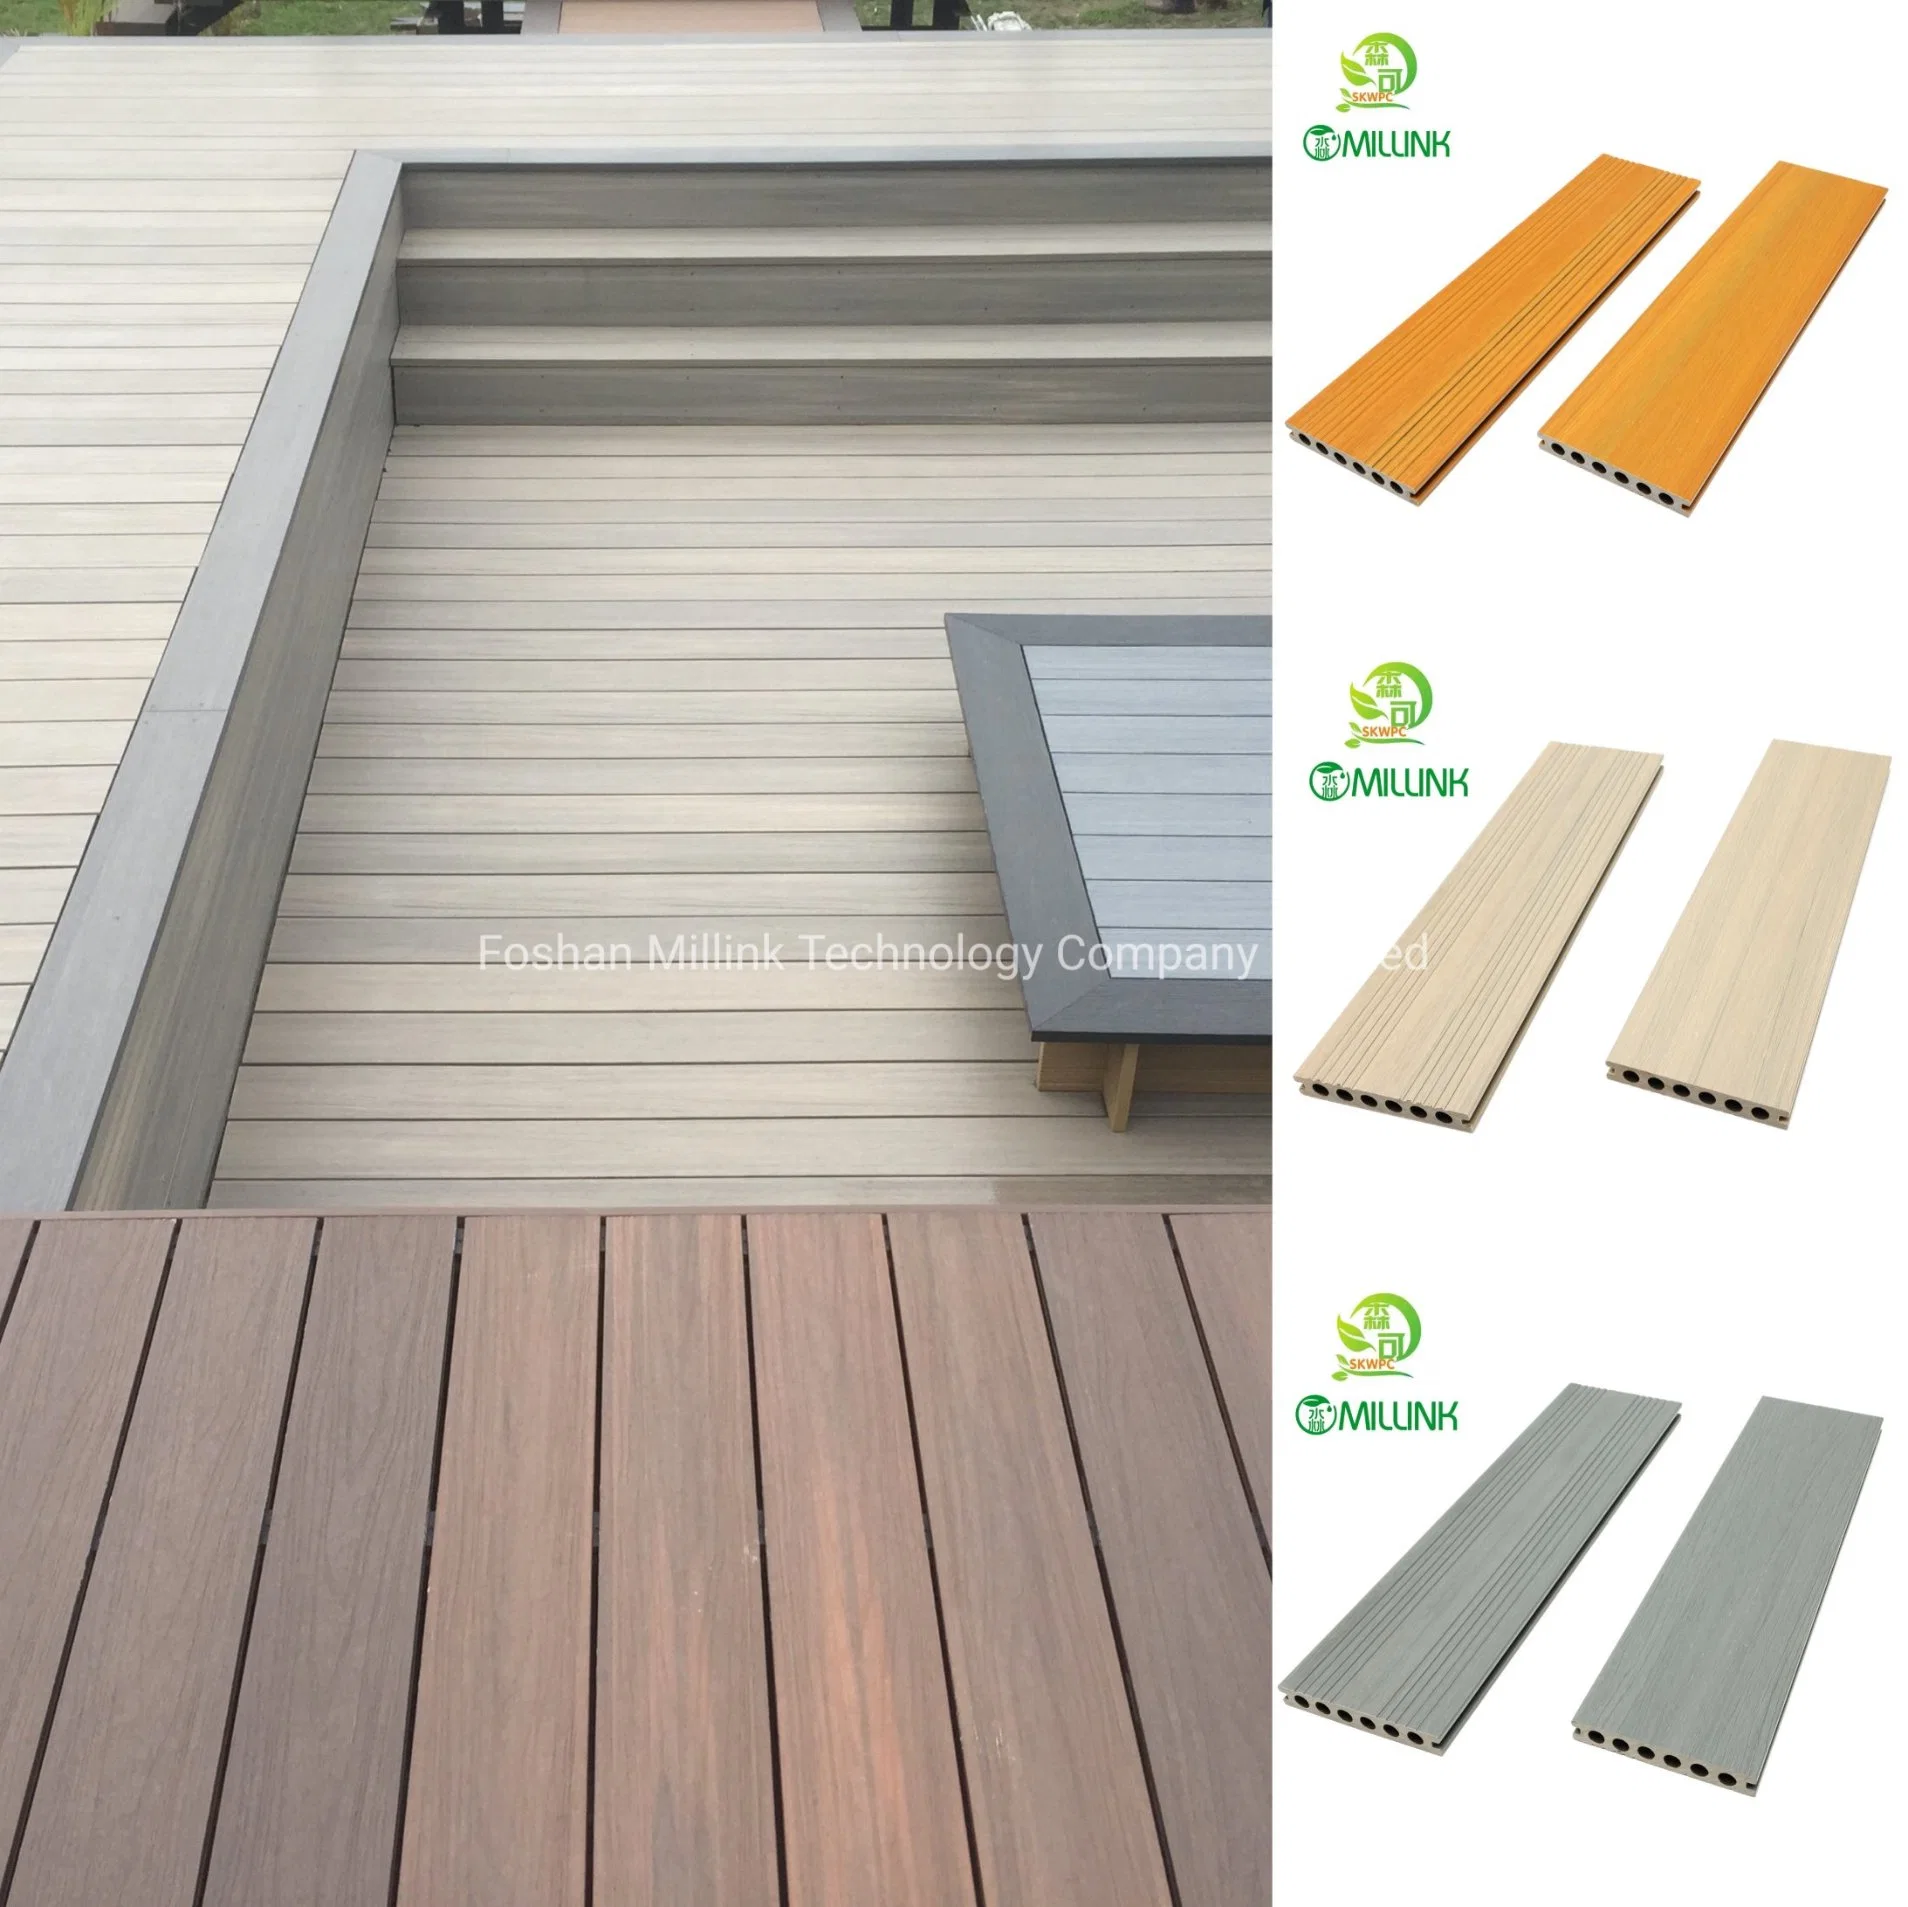 Neues Design WPC Vinyl Plank Holz Kunststoff Laminat lose legen Bodenbelag Terrassenfliesen